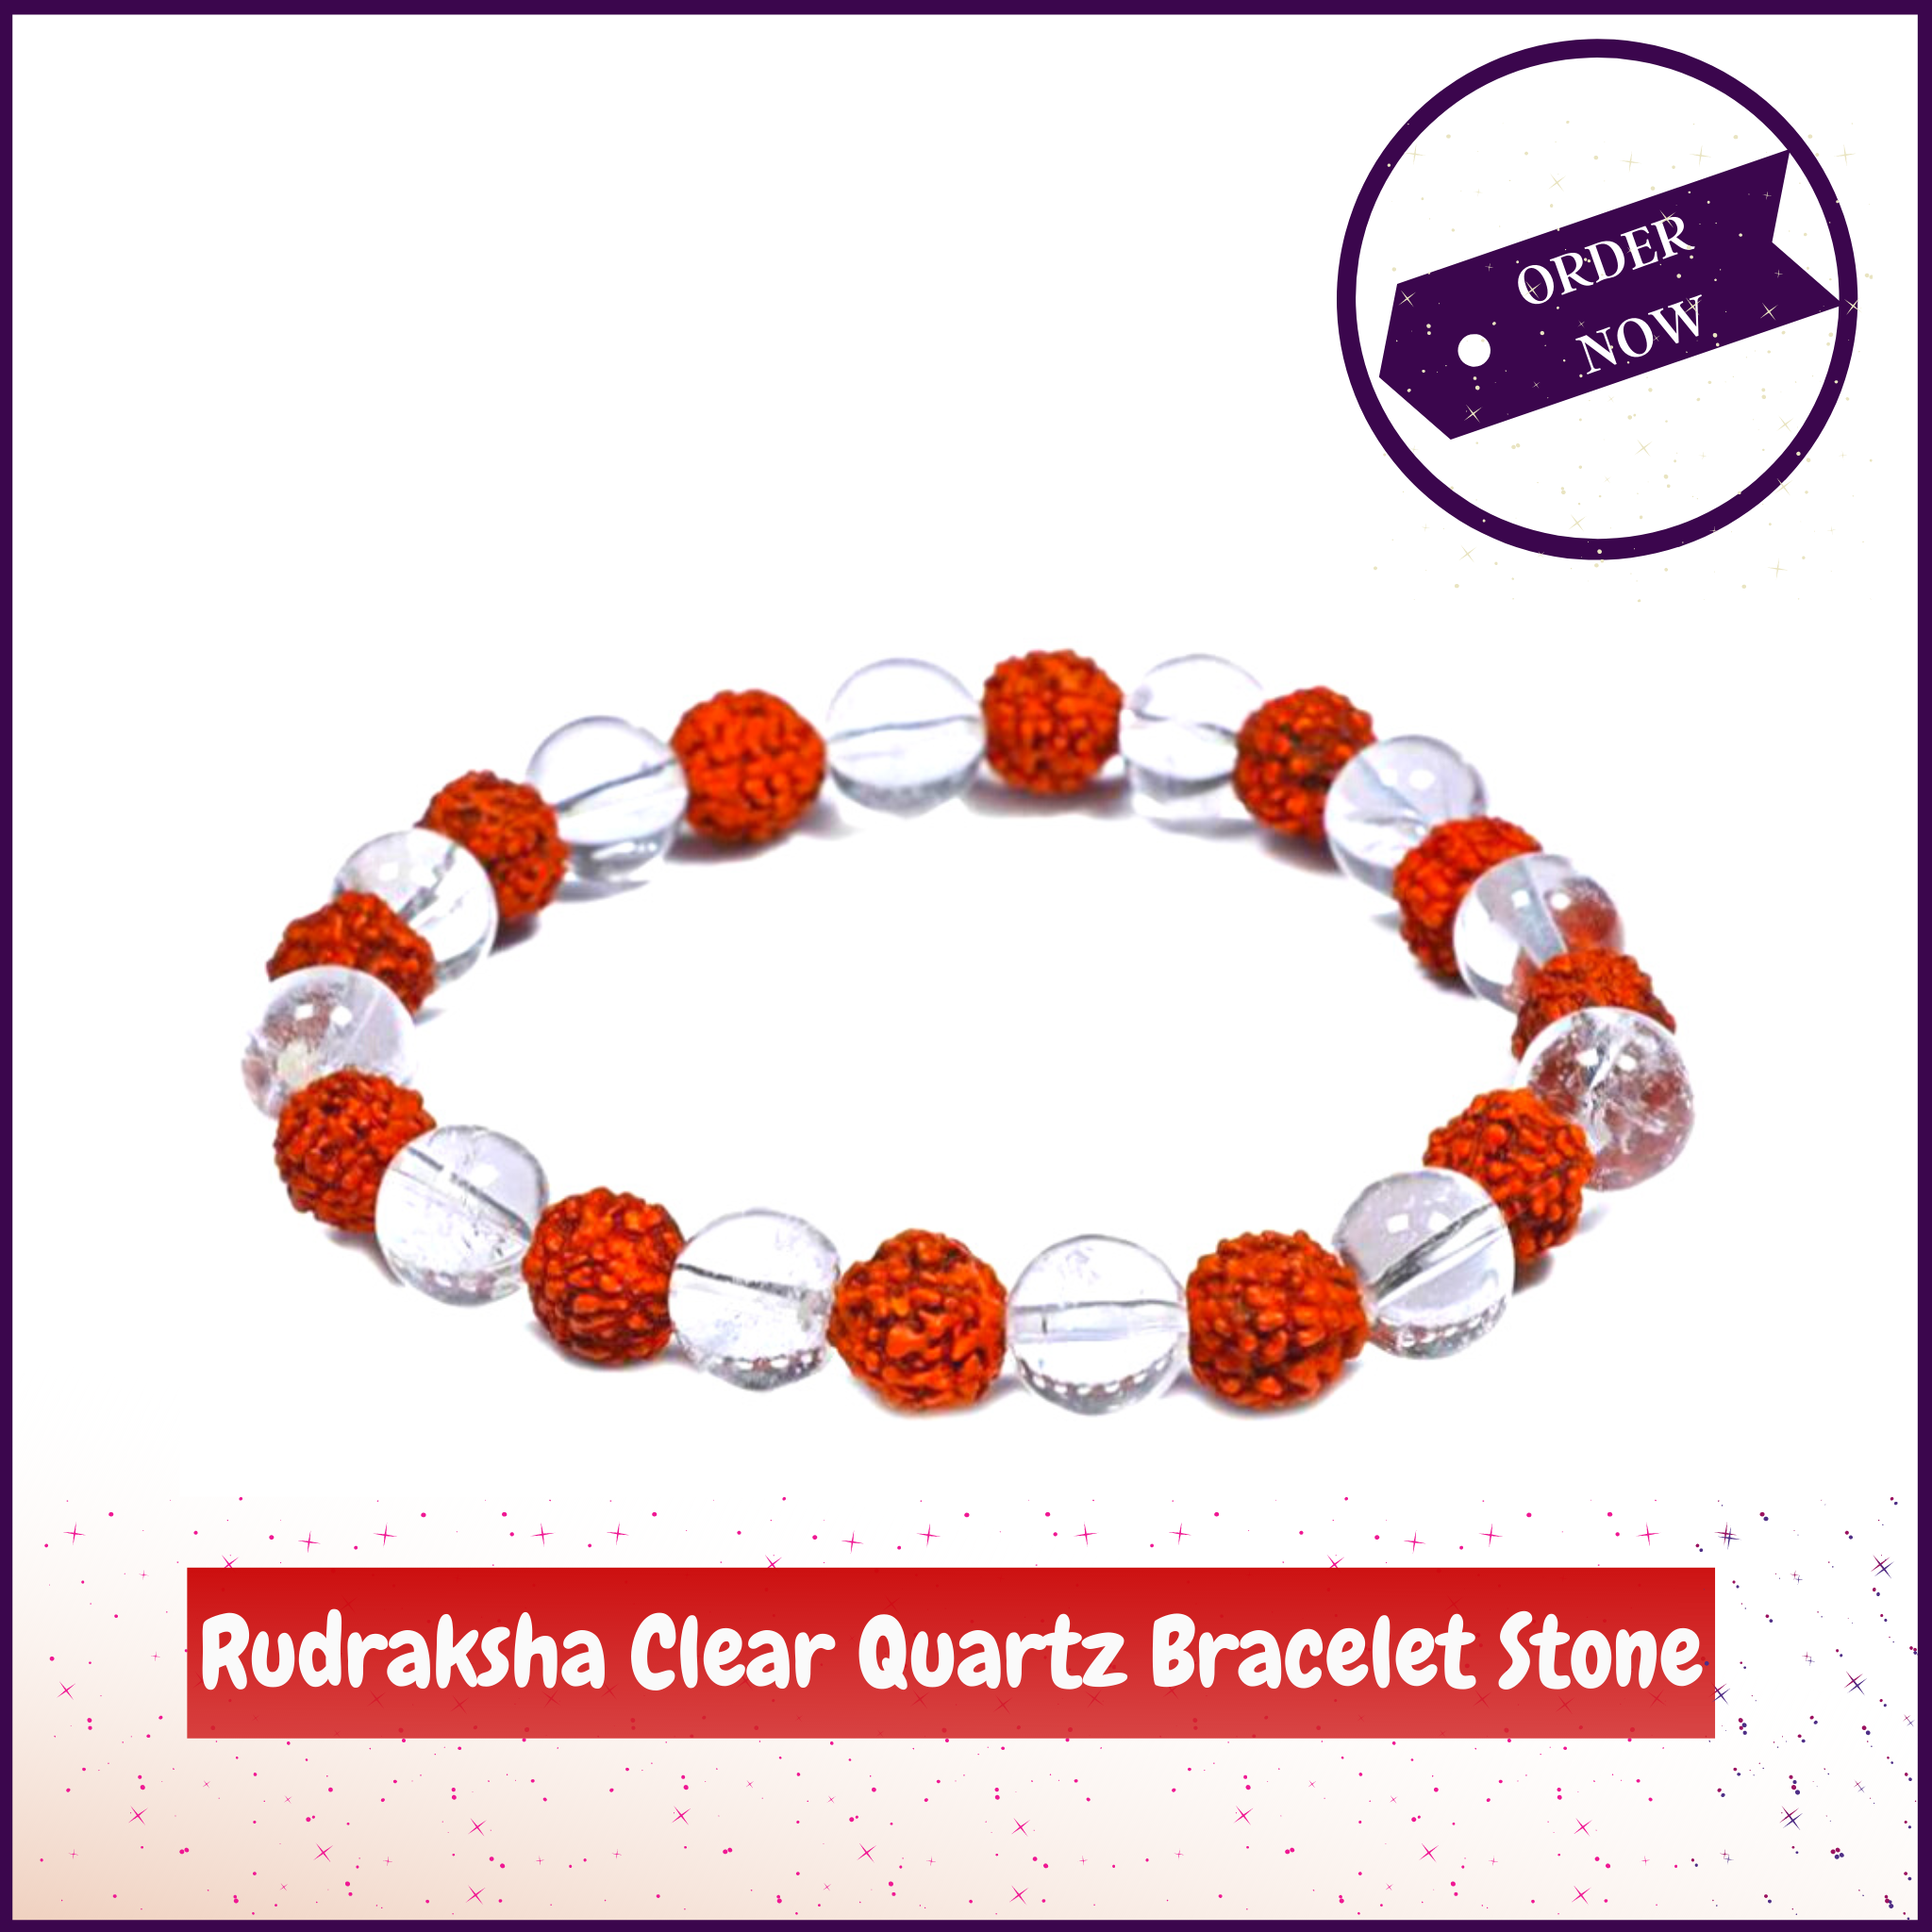 Rudraksha Clear Quartz Crystal Stone Bracelet For Purification of Body-Mind-Soul - 51pyramids